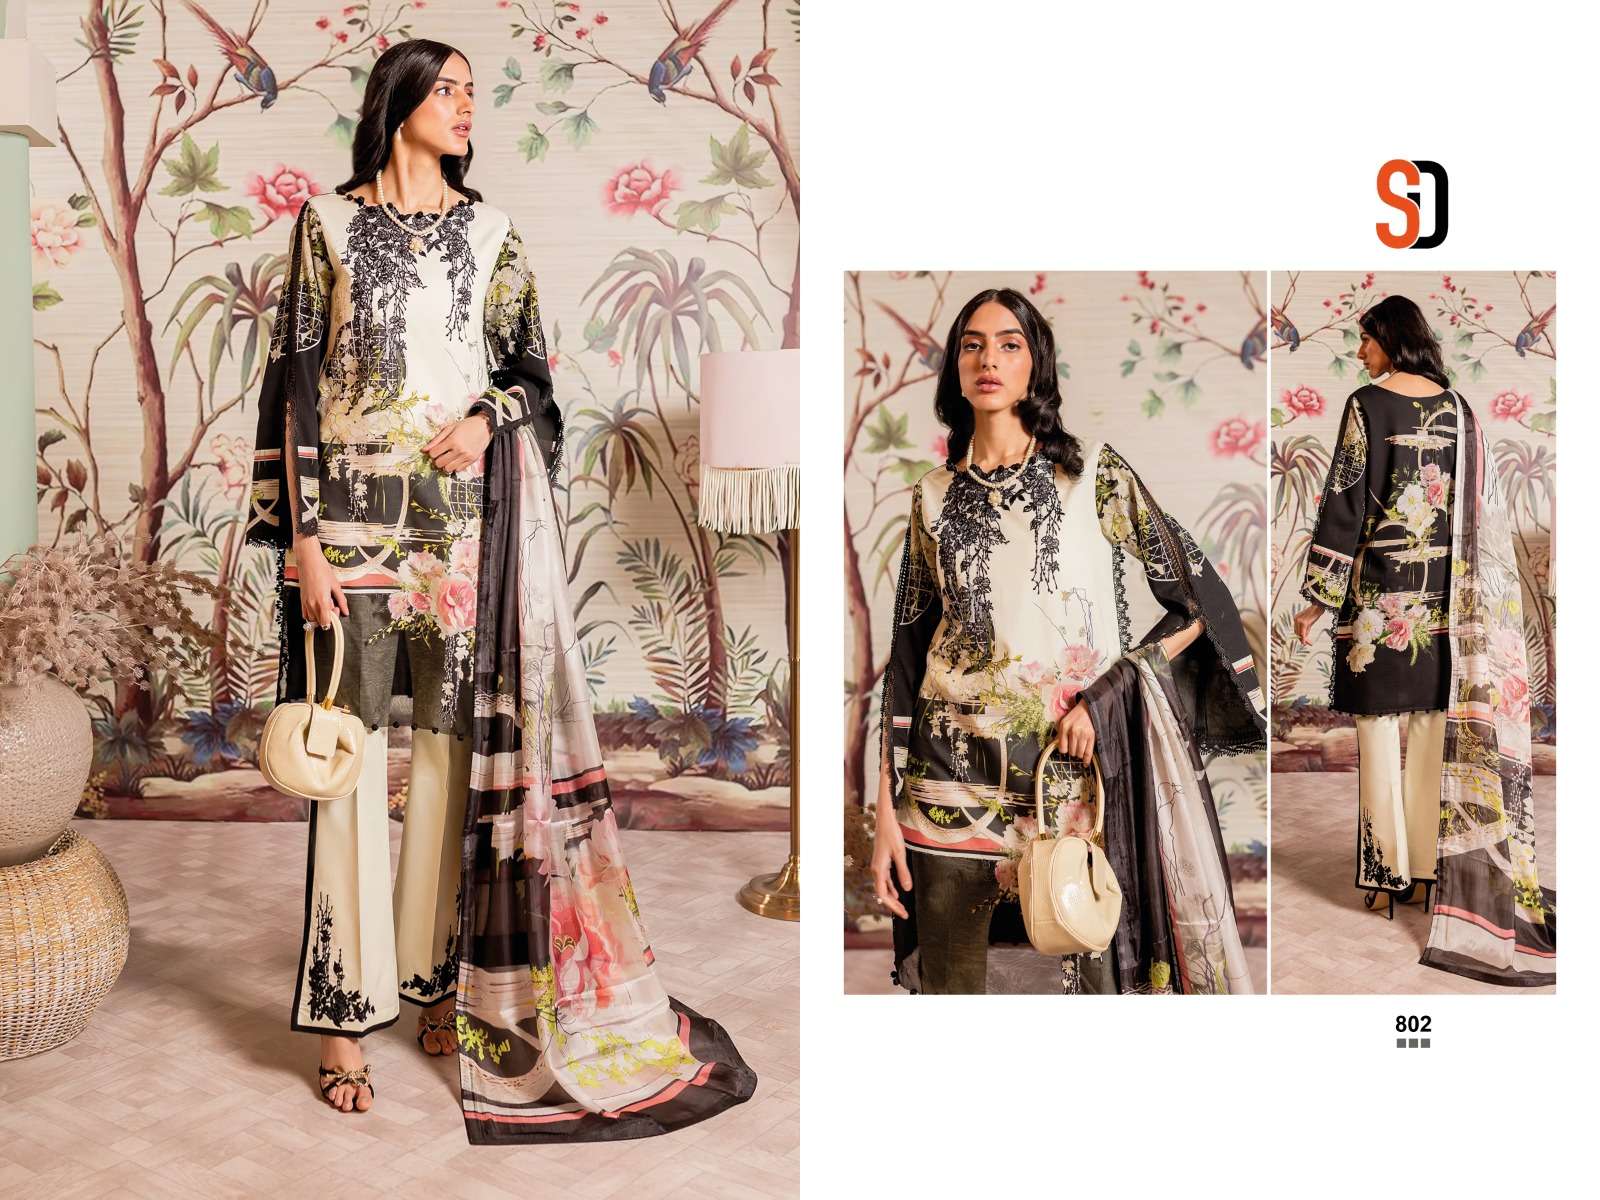 shraddha firdous vol 8 801-804 series pakisatani lawn cotton with cotton dupatta salwar kameez catalogue set to set 